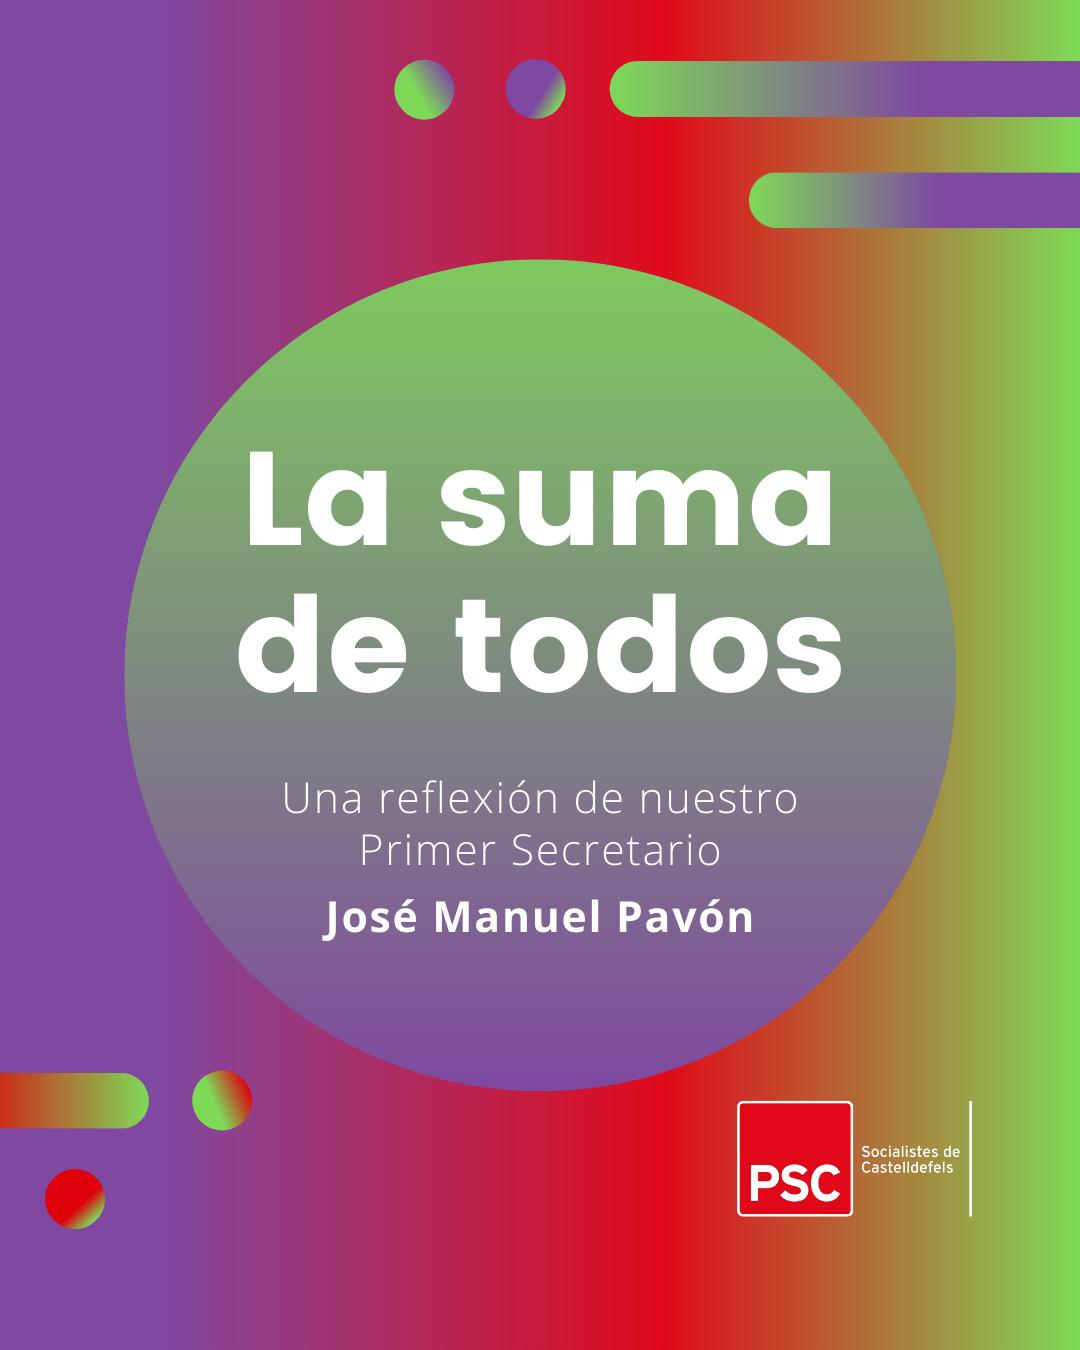 José Manuel Pavón, Primer Secretario PSC Castelldefels